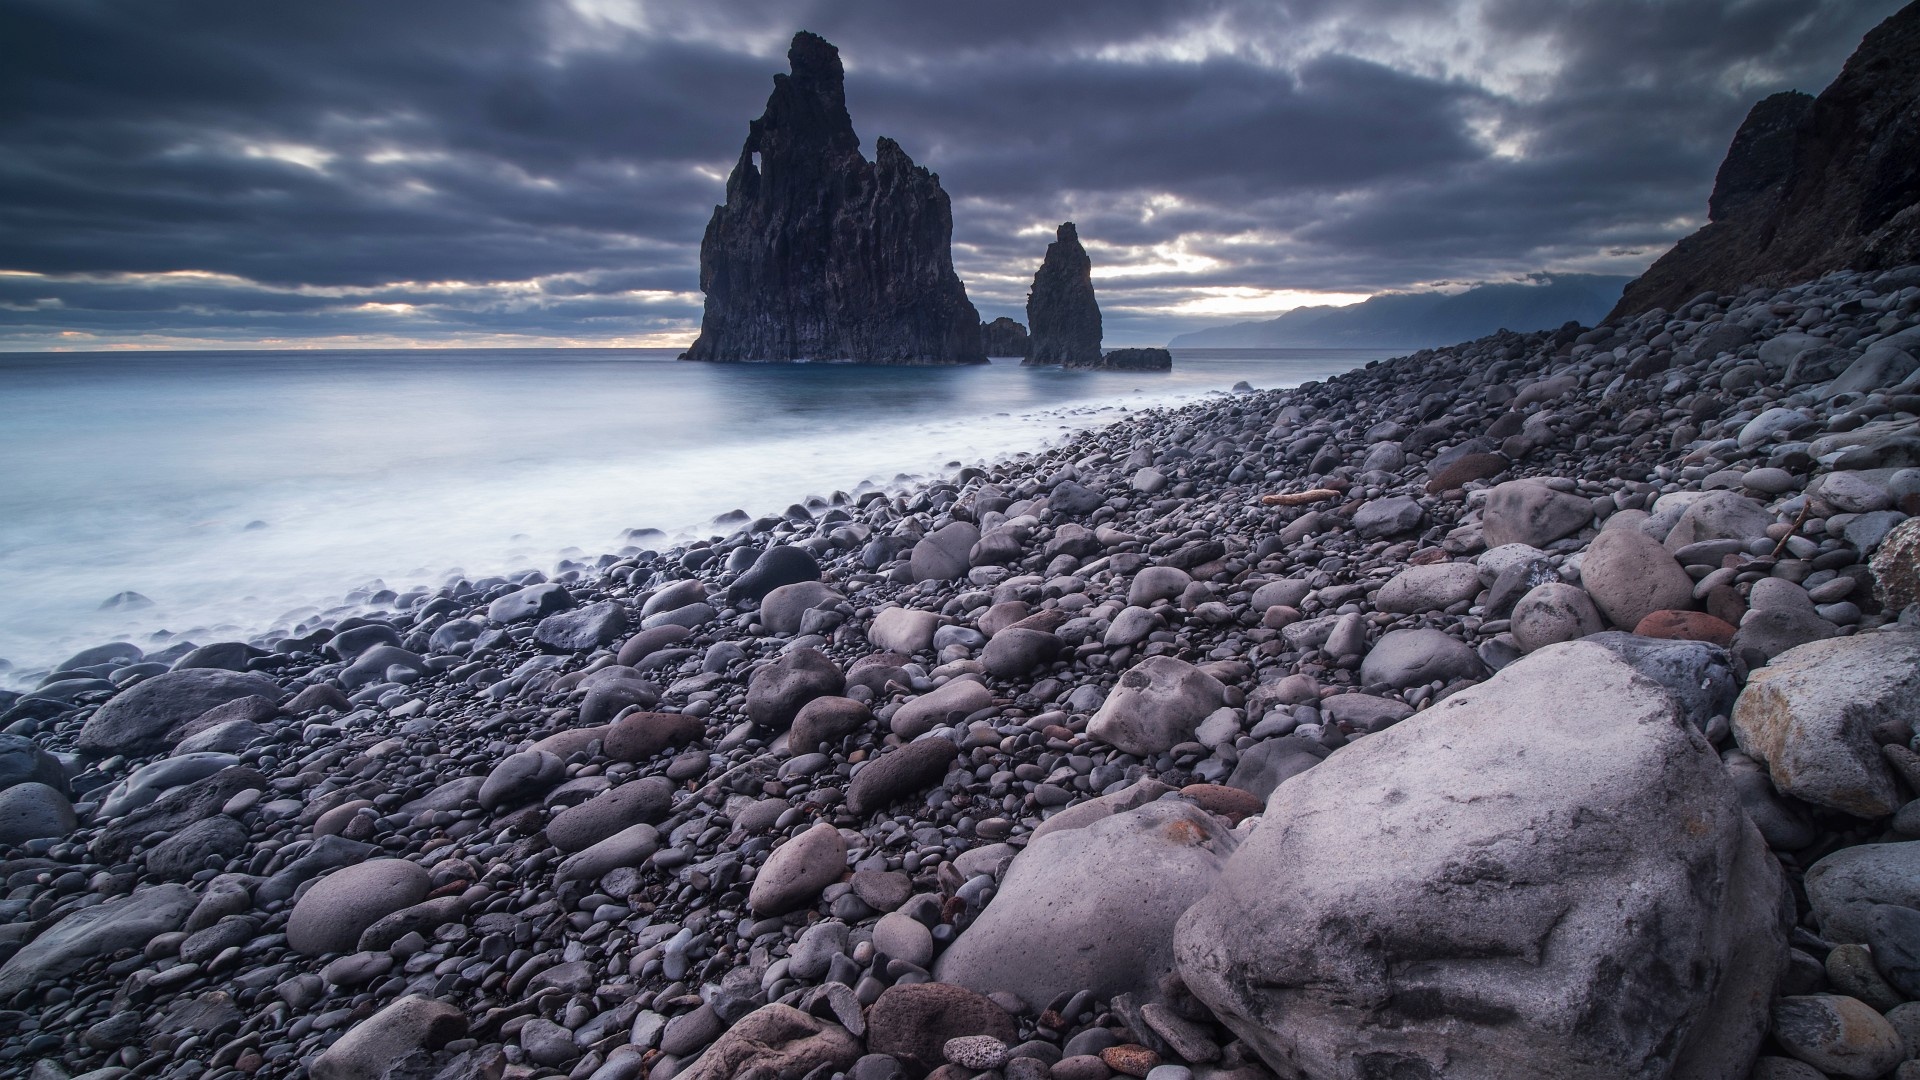 Madeira travels, Tomasz Worek photography, Coastal beauty, Cliff formations, 1920x1080 Full HD Desktop